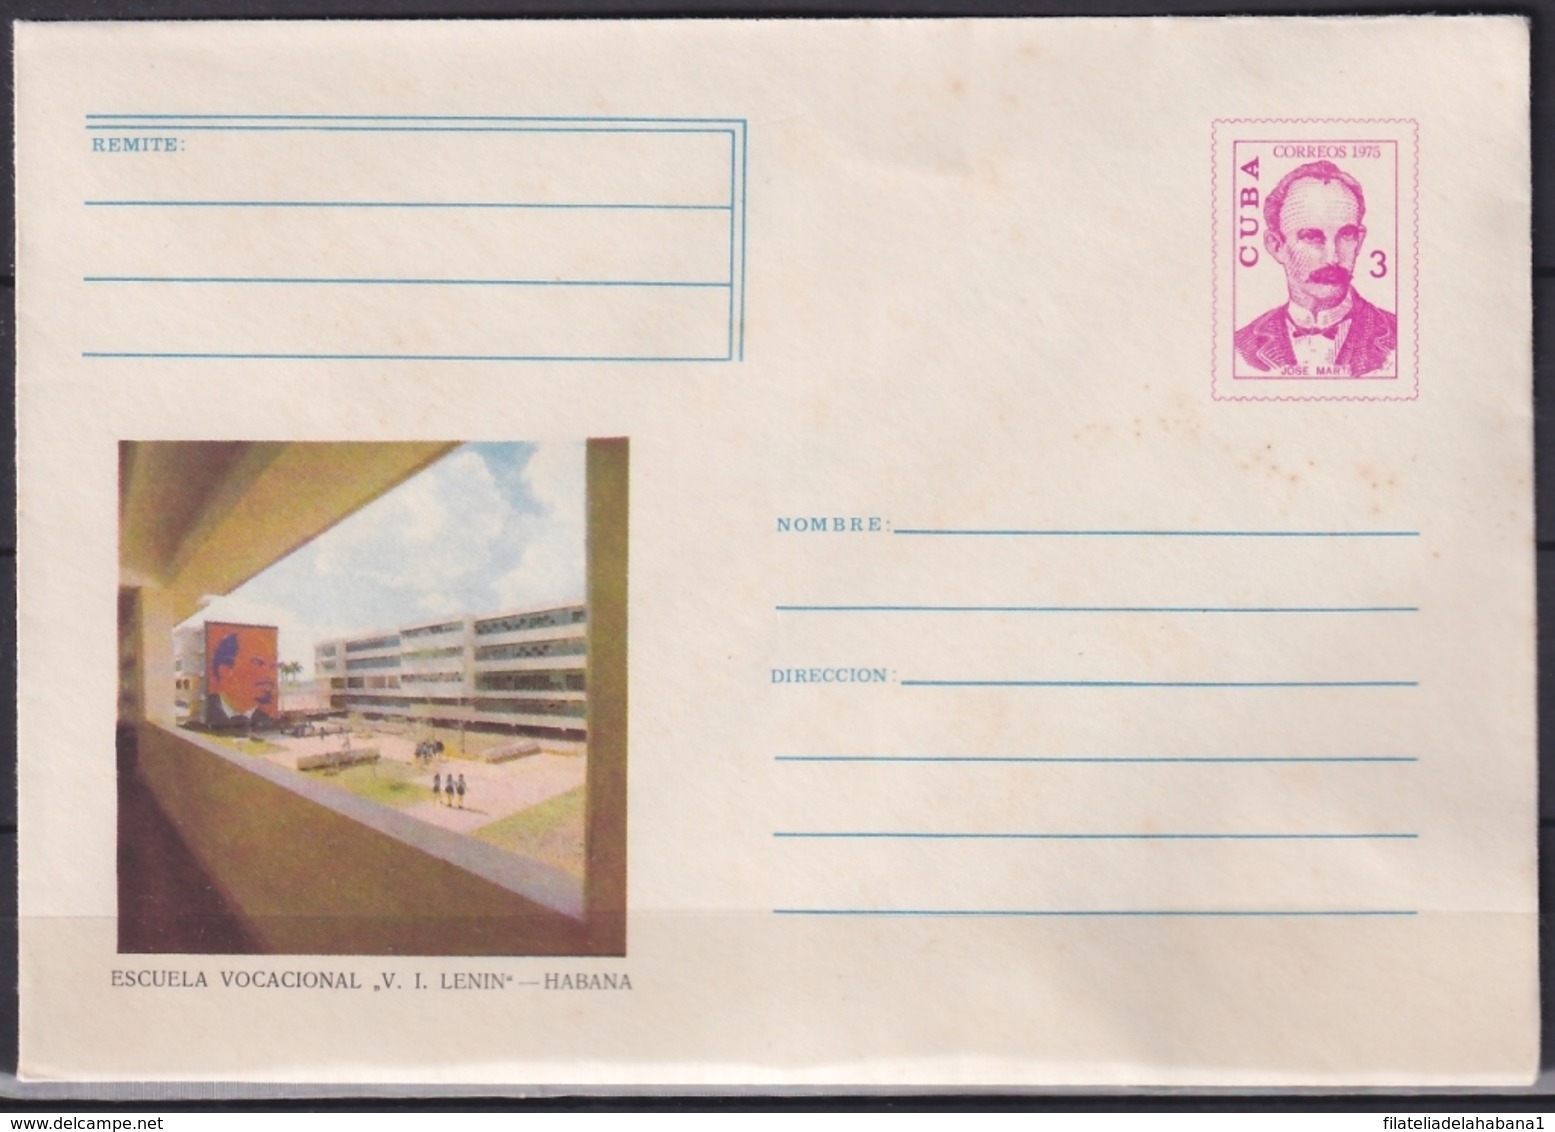 1975-EP-113 CUBA 1975 3c POSTAL STATIONERY COVER. HAVANA, ESCUELA VOCACIONAL LENIN. MANCHAS. - Covers & Documents